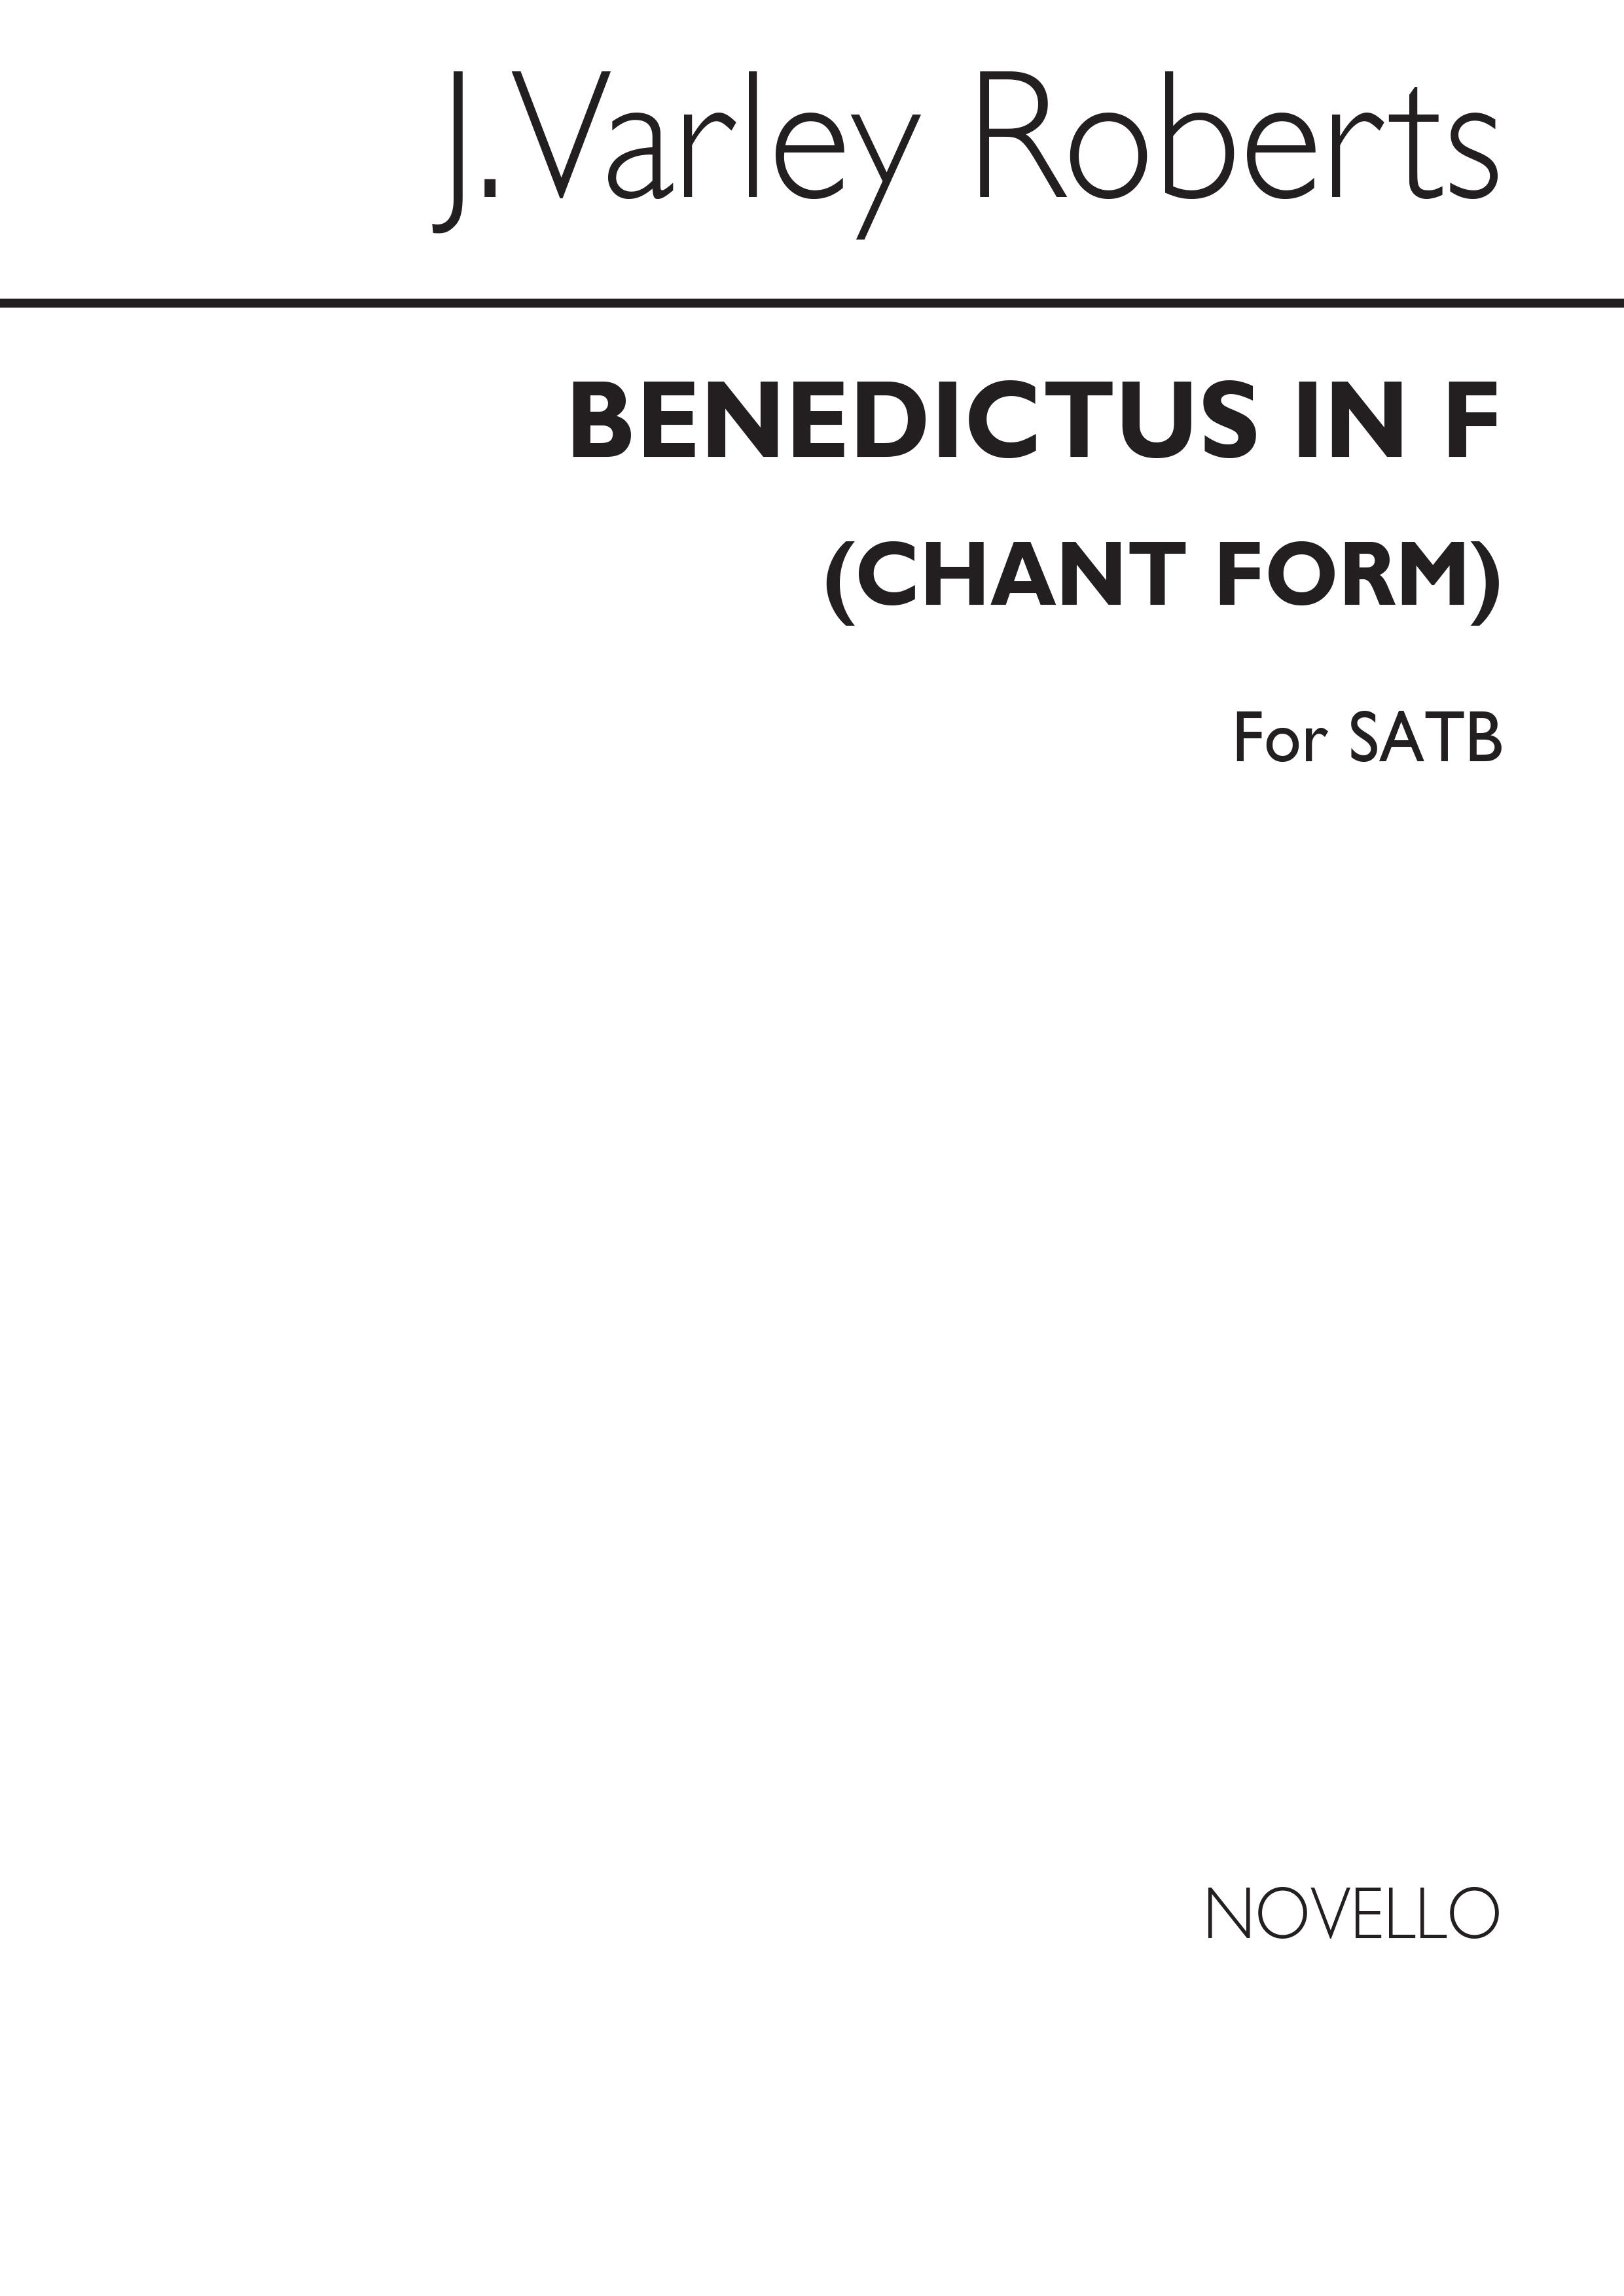 J. Varley Roberts: Benedictus In F (Chant Form) SATB